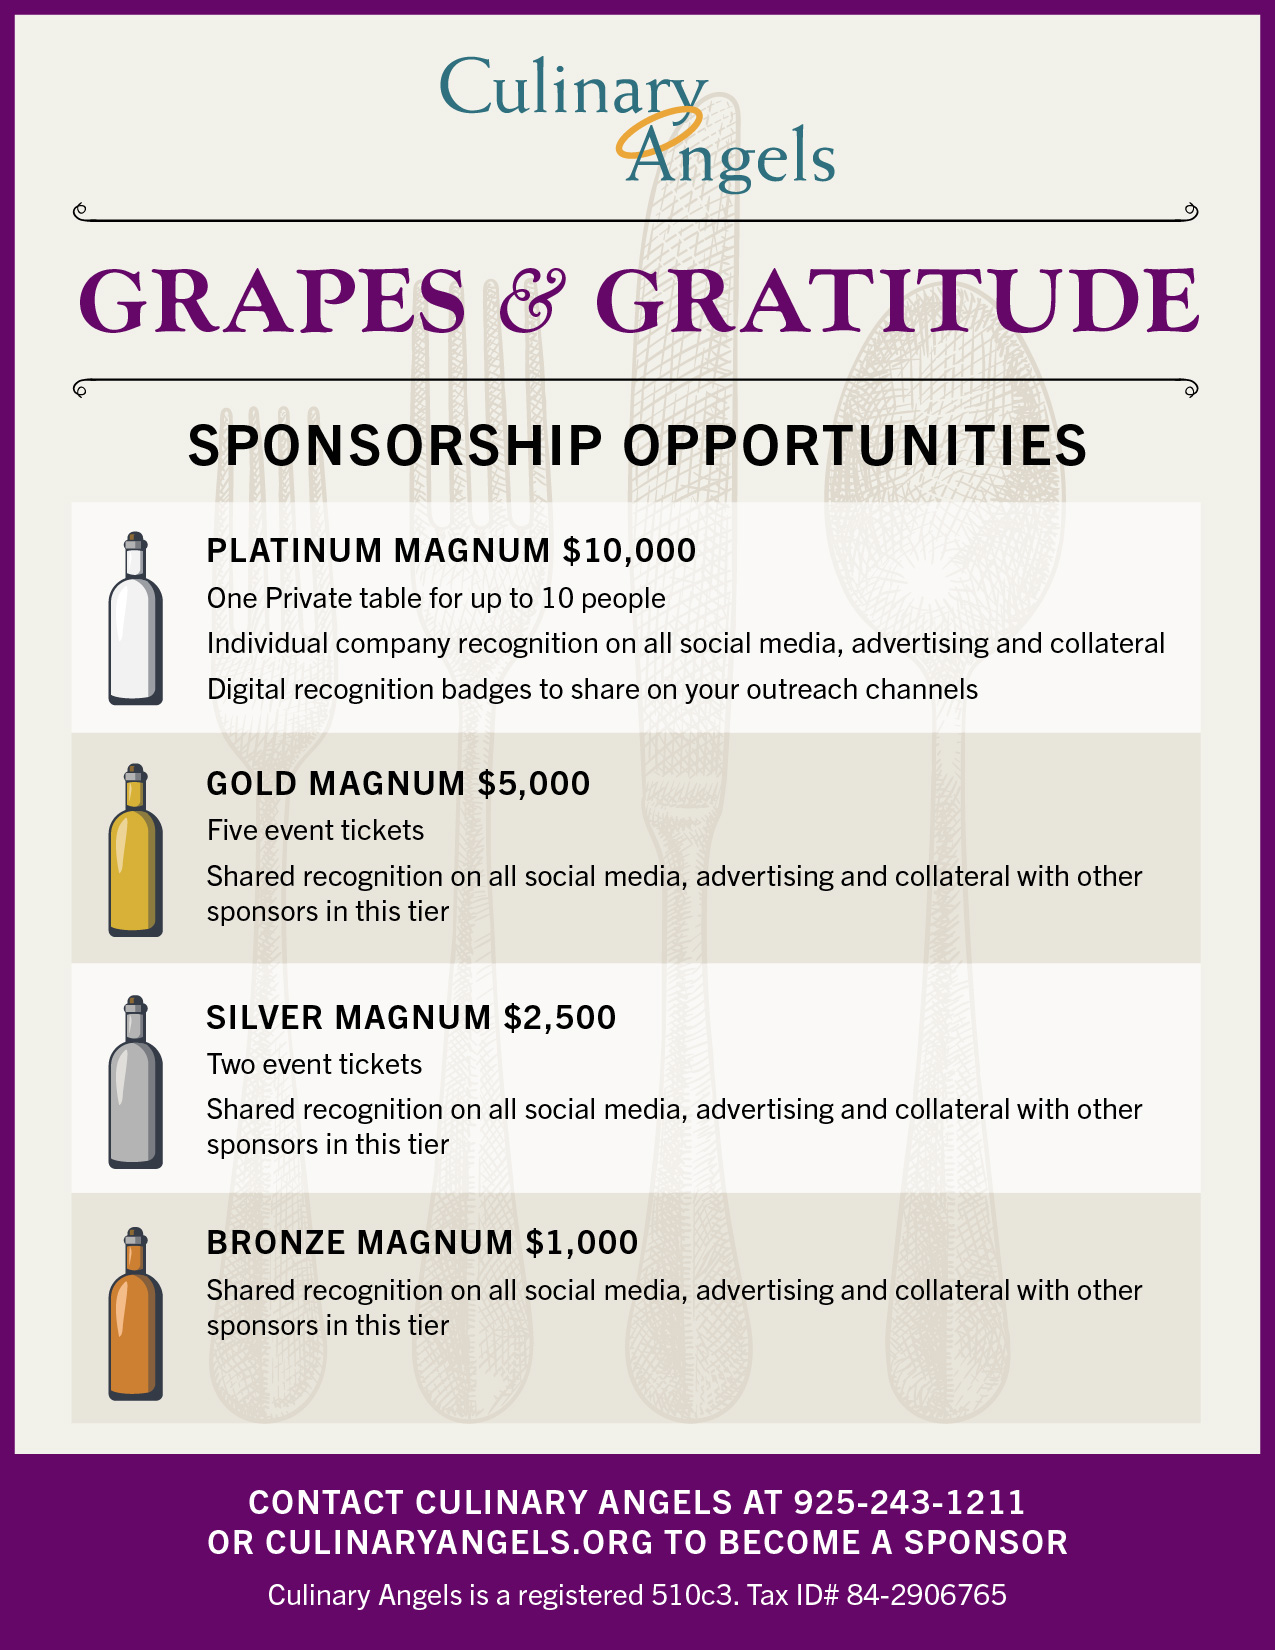 Grapes & Gratitude Sponsorships